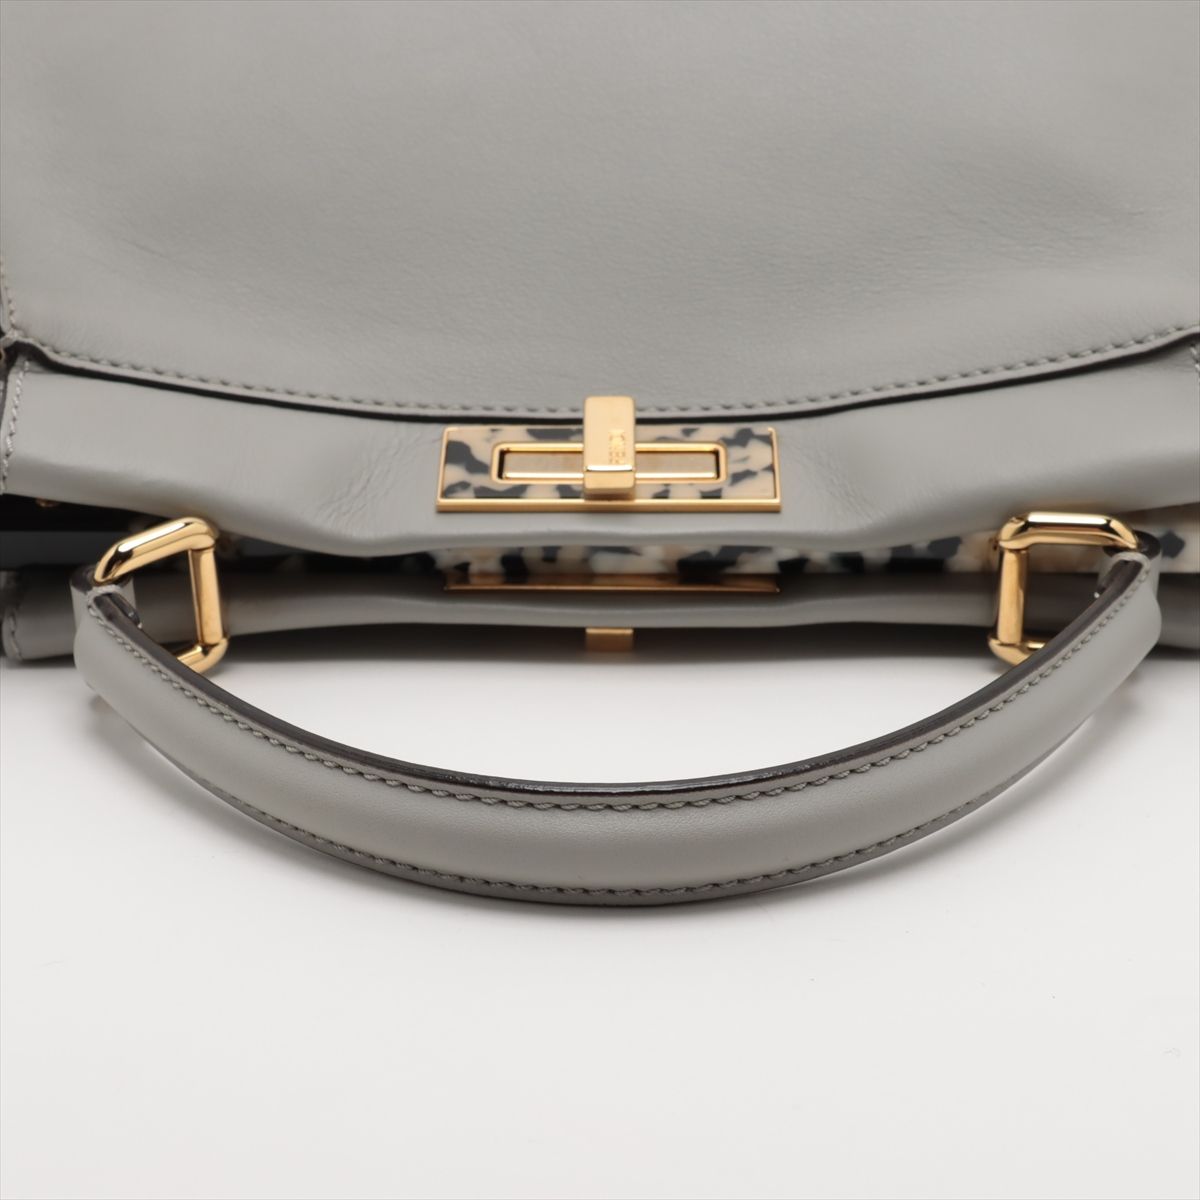 Fendi Peekaboo Regular 2-Way Bag in Grey with Tortoiseshell Accents - Vault 55 | Preowned Designer Handbags